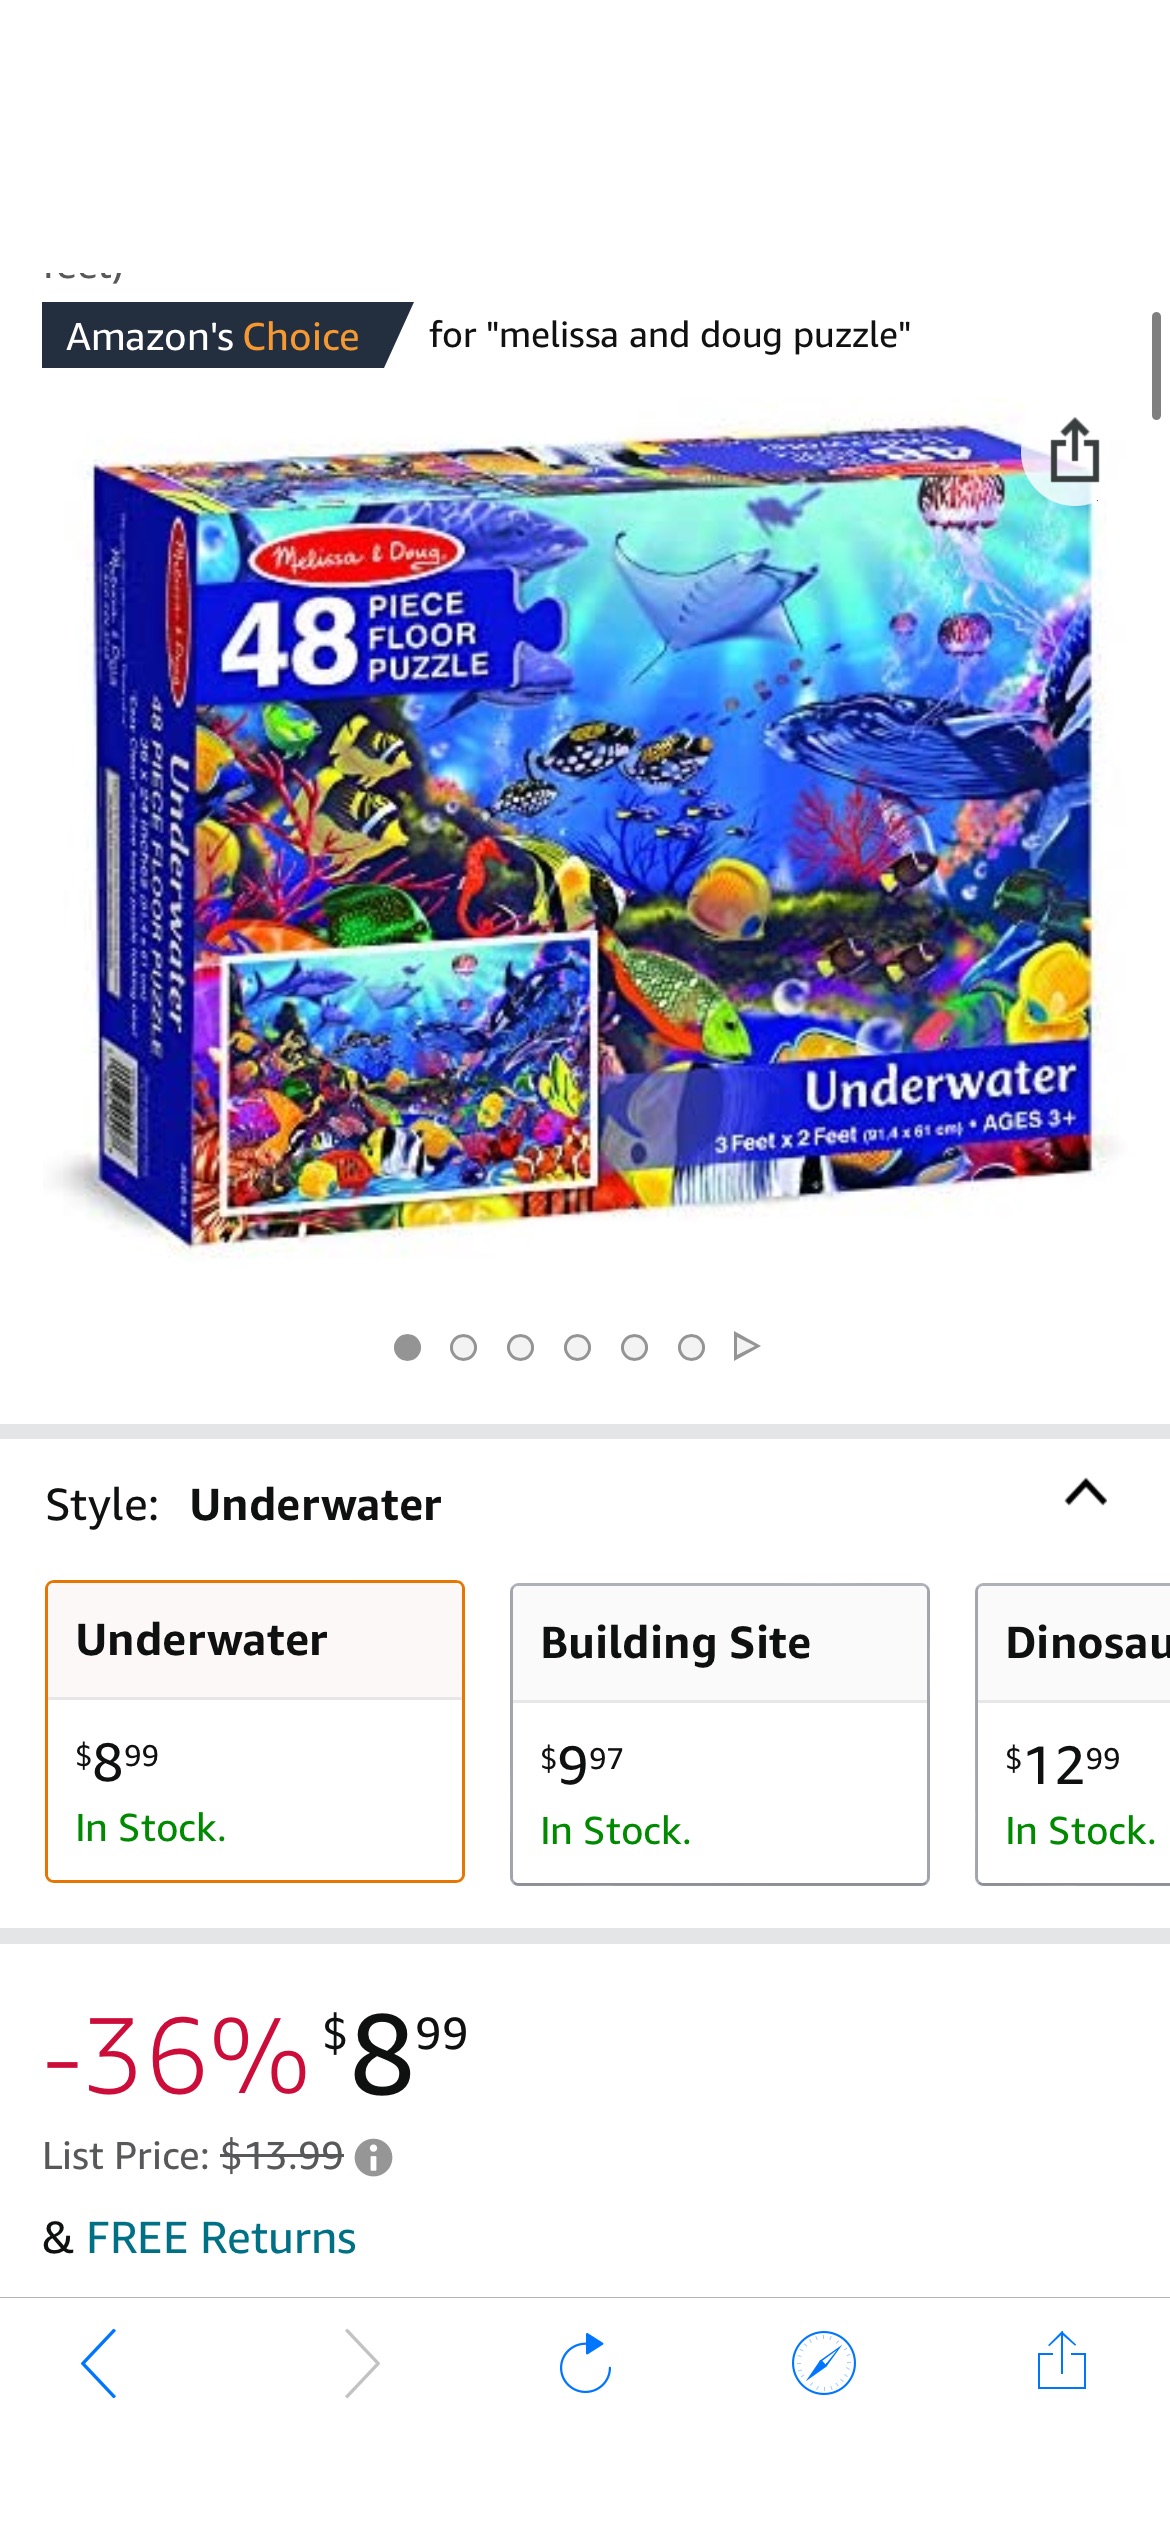 Amazon.com: Melissa & Doug Underwater Ocean Floor Puzzle (48 pcs, 2 x 3 feet) : Melissa & Doug:海洋拼图